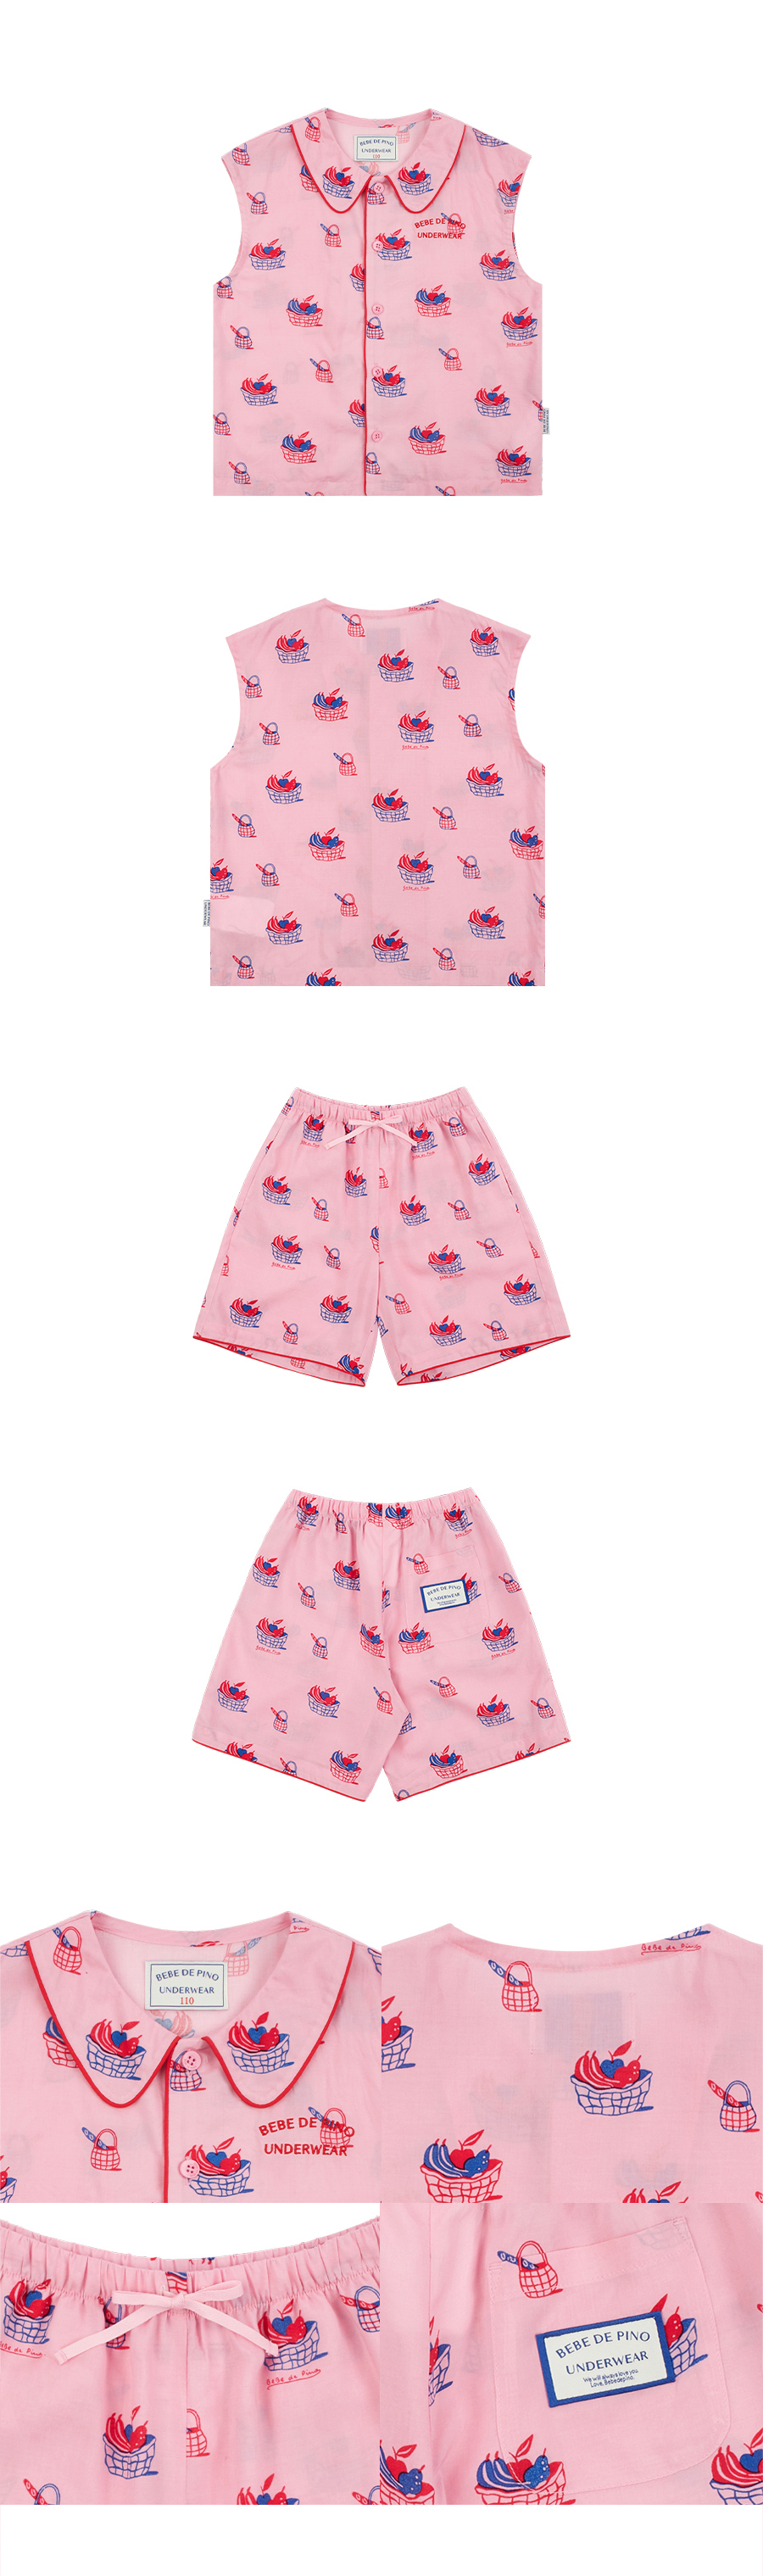 Paris pink fruit sleeveless pajamas set Details